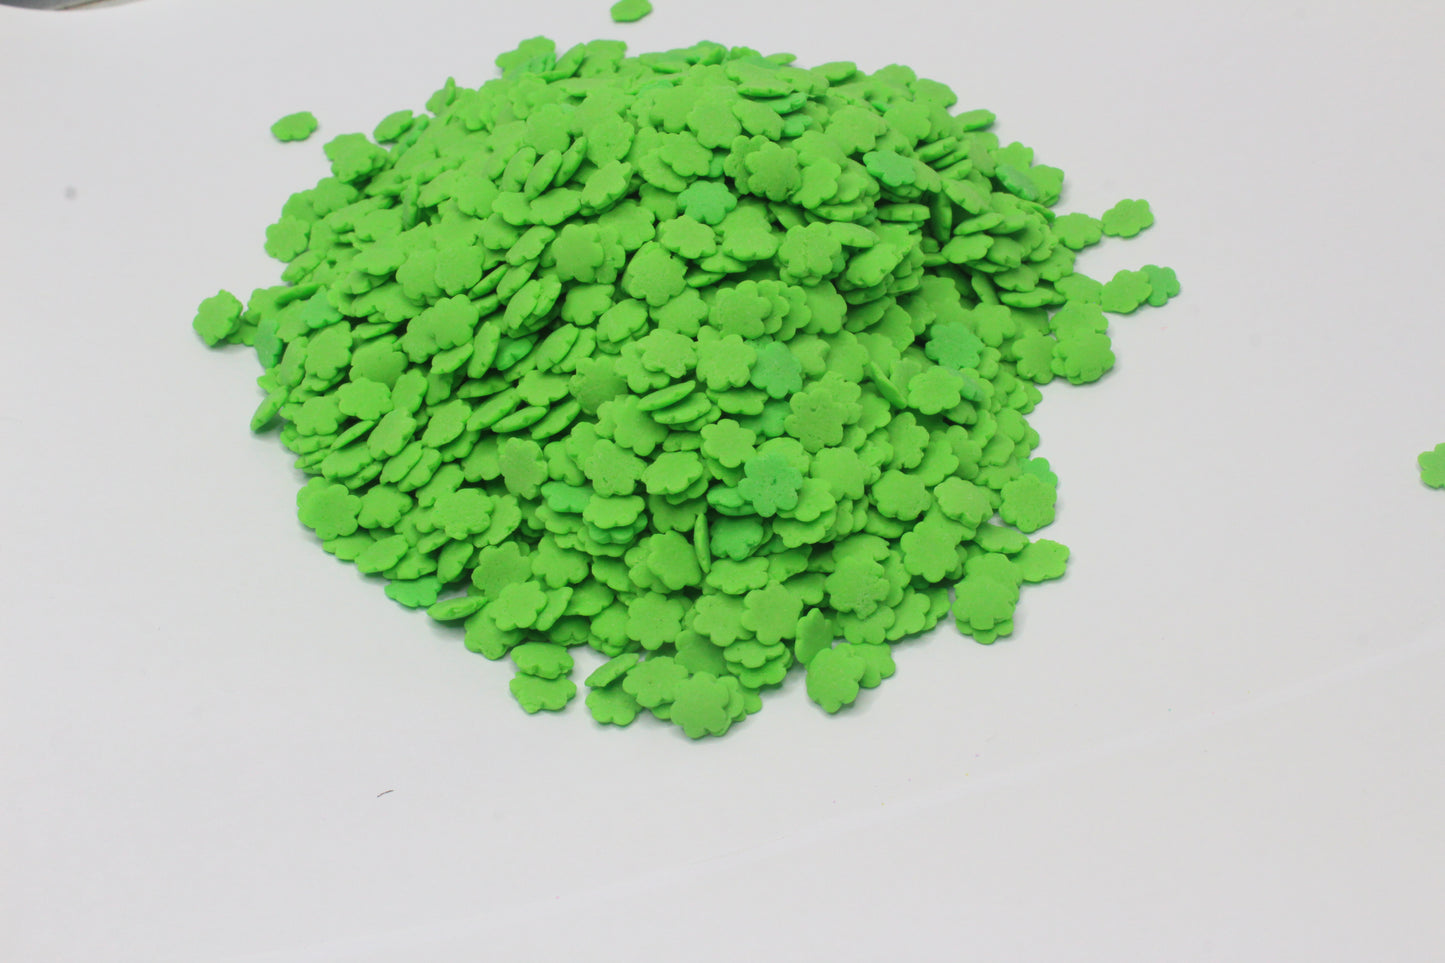 4mm Solid Green Flower Sprinkle Confetti